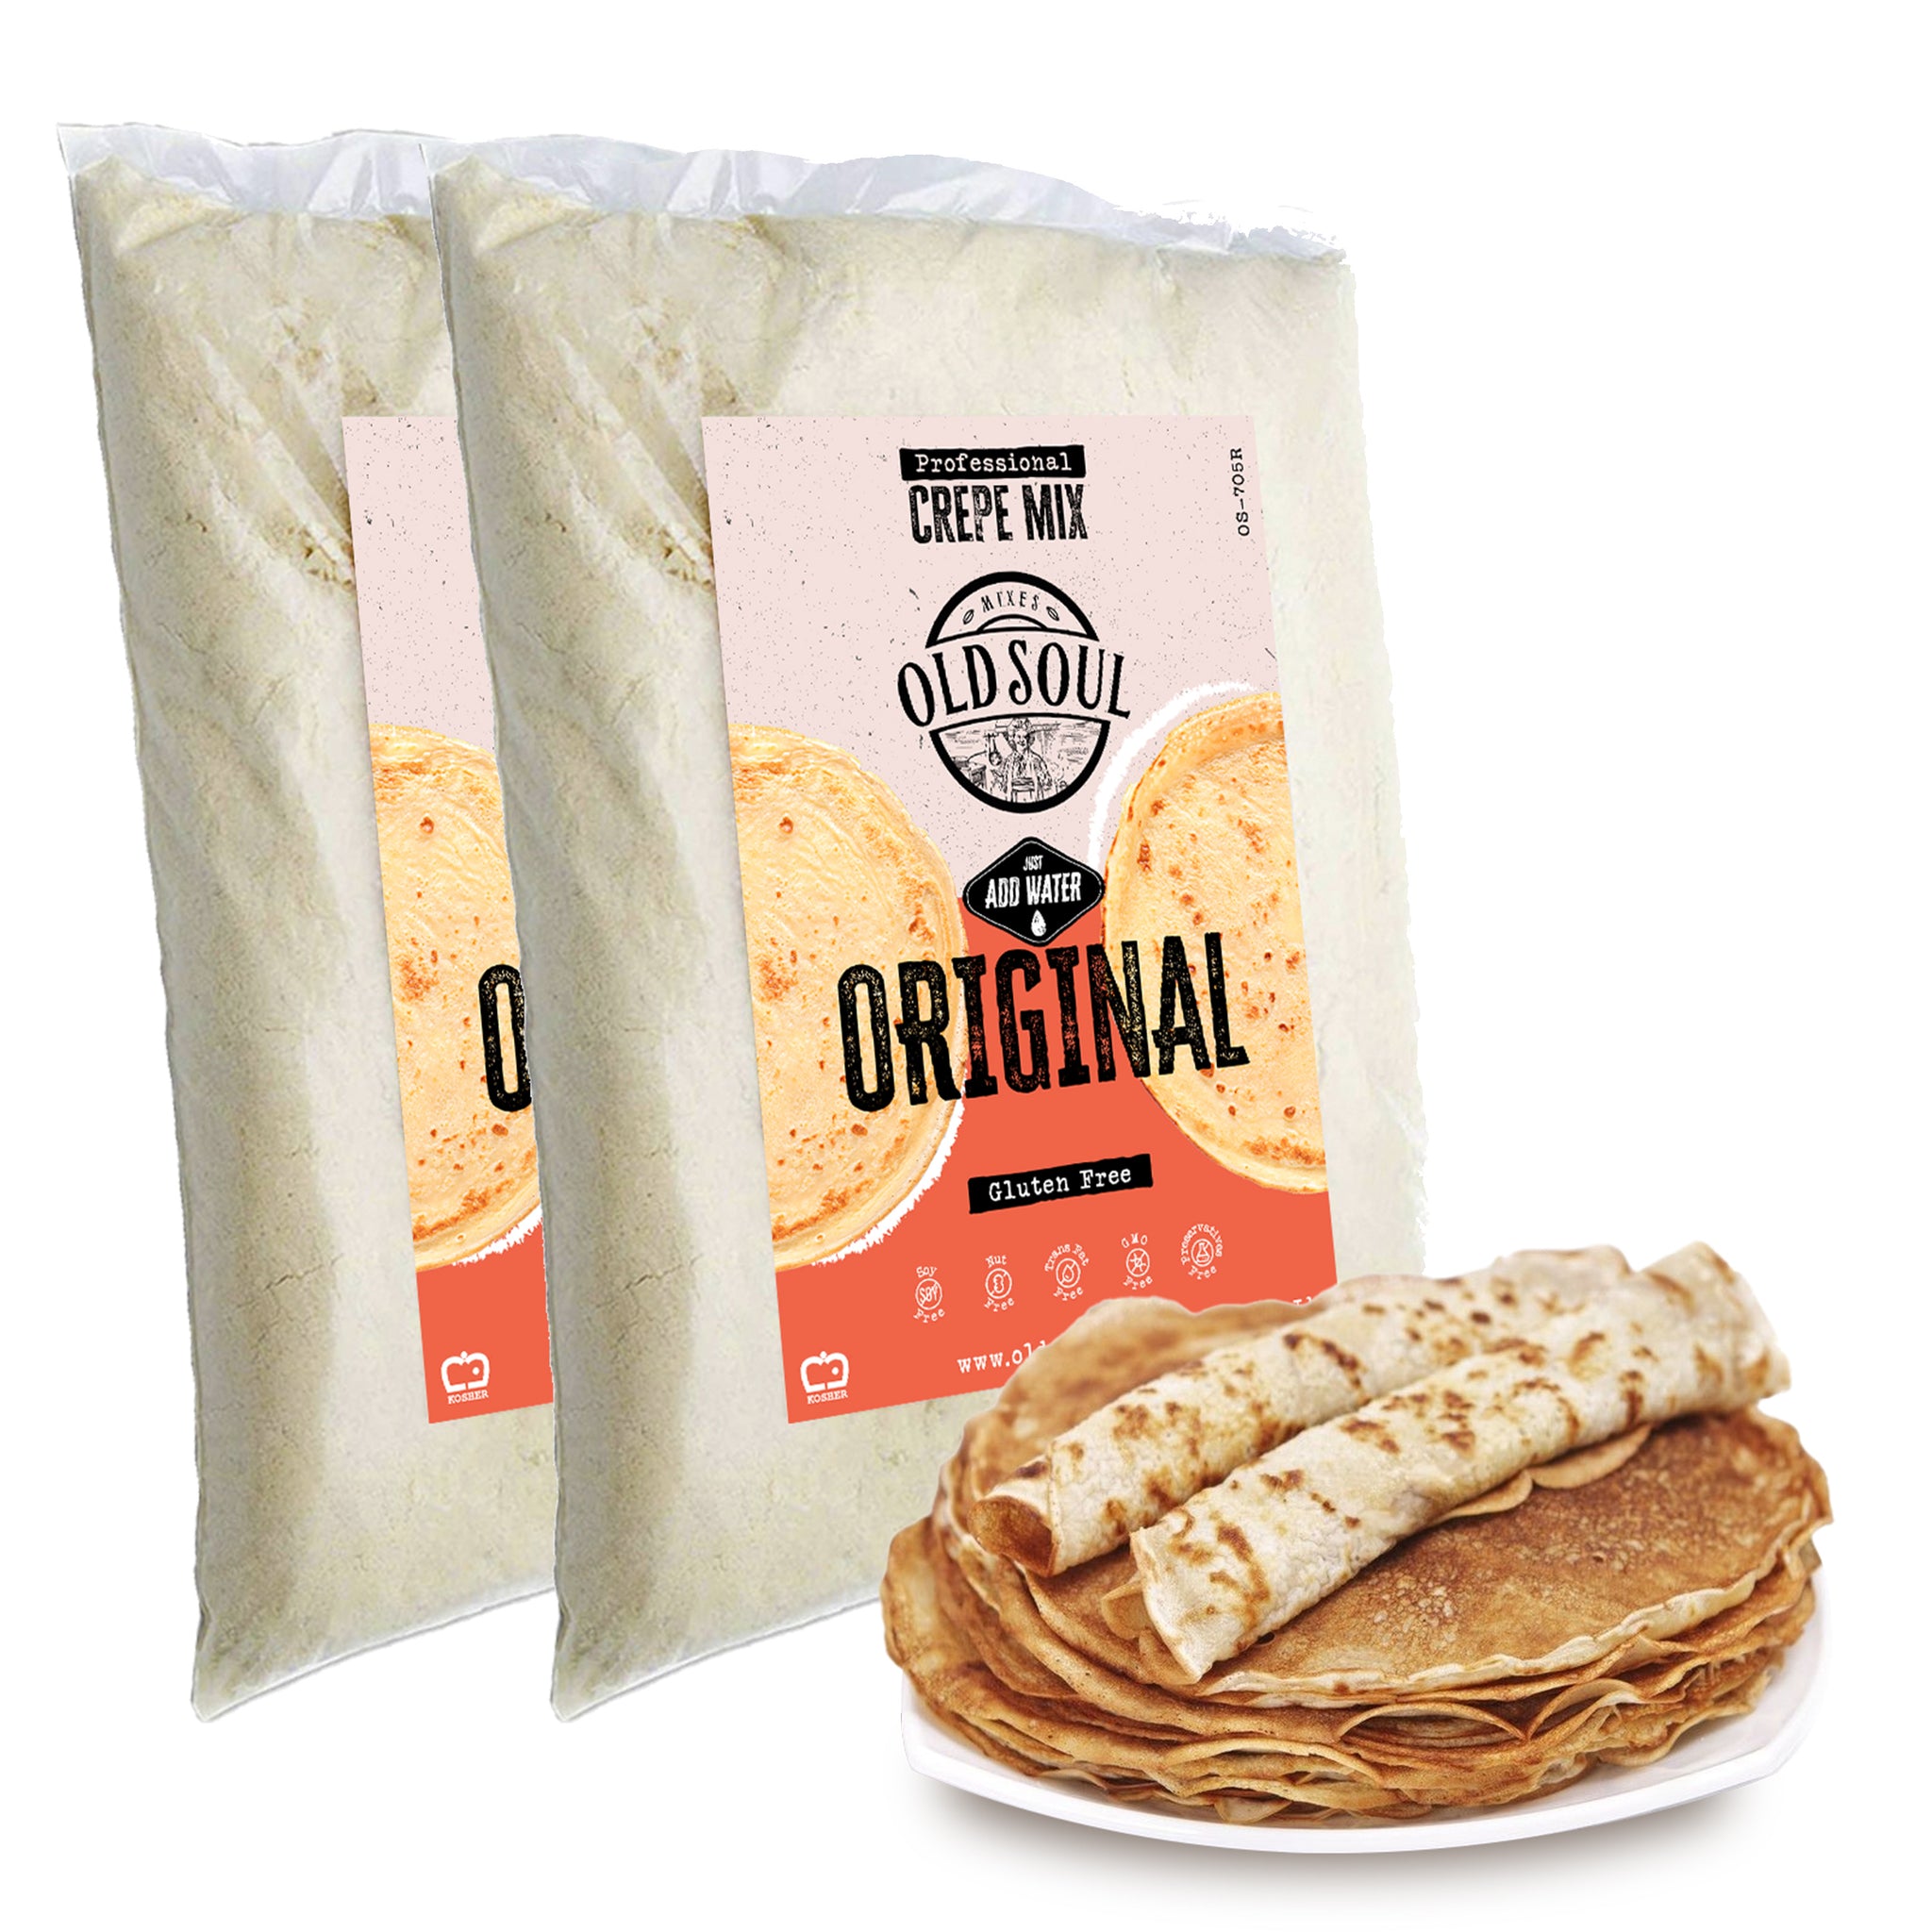 OldSoul Professional Crepe Dough Mix | Crispy | Batter Mix for Fresh Pancakes